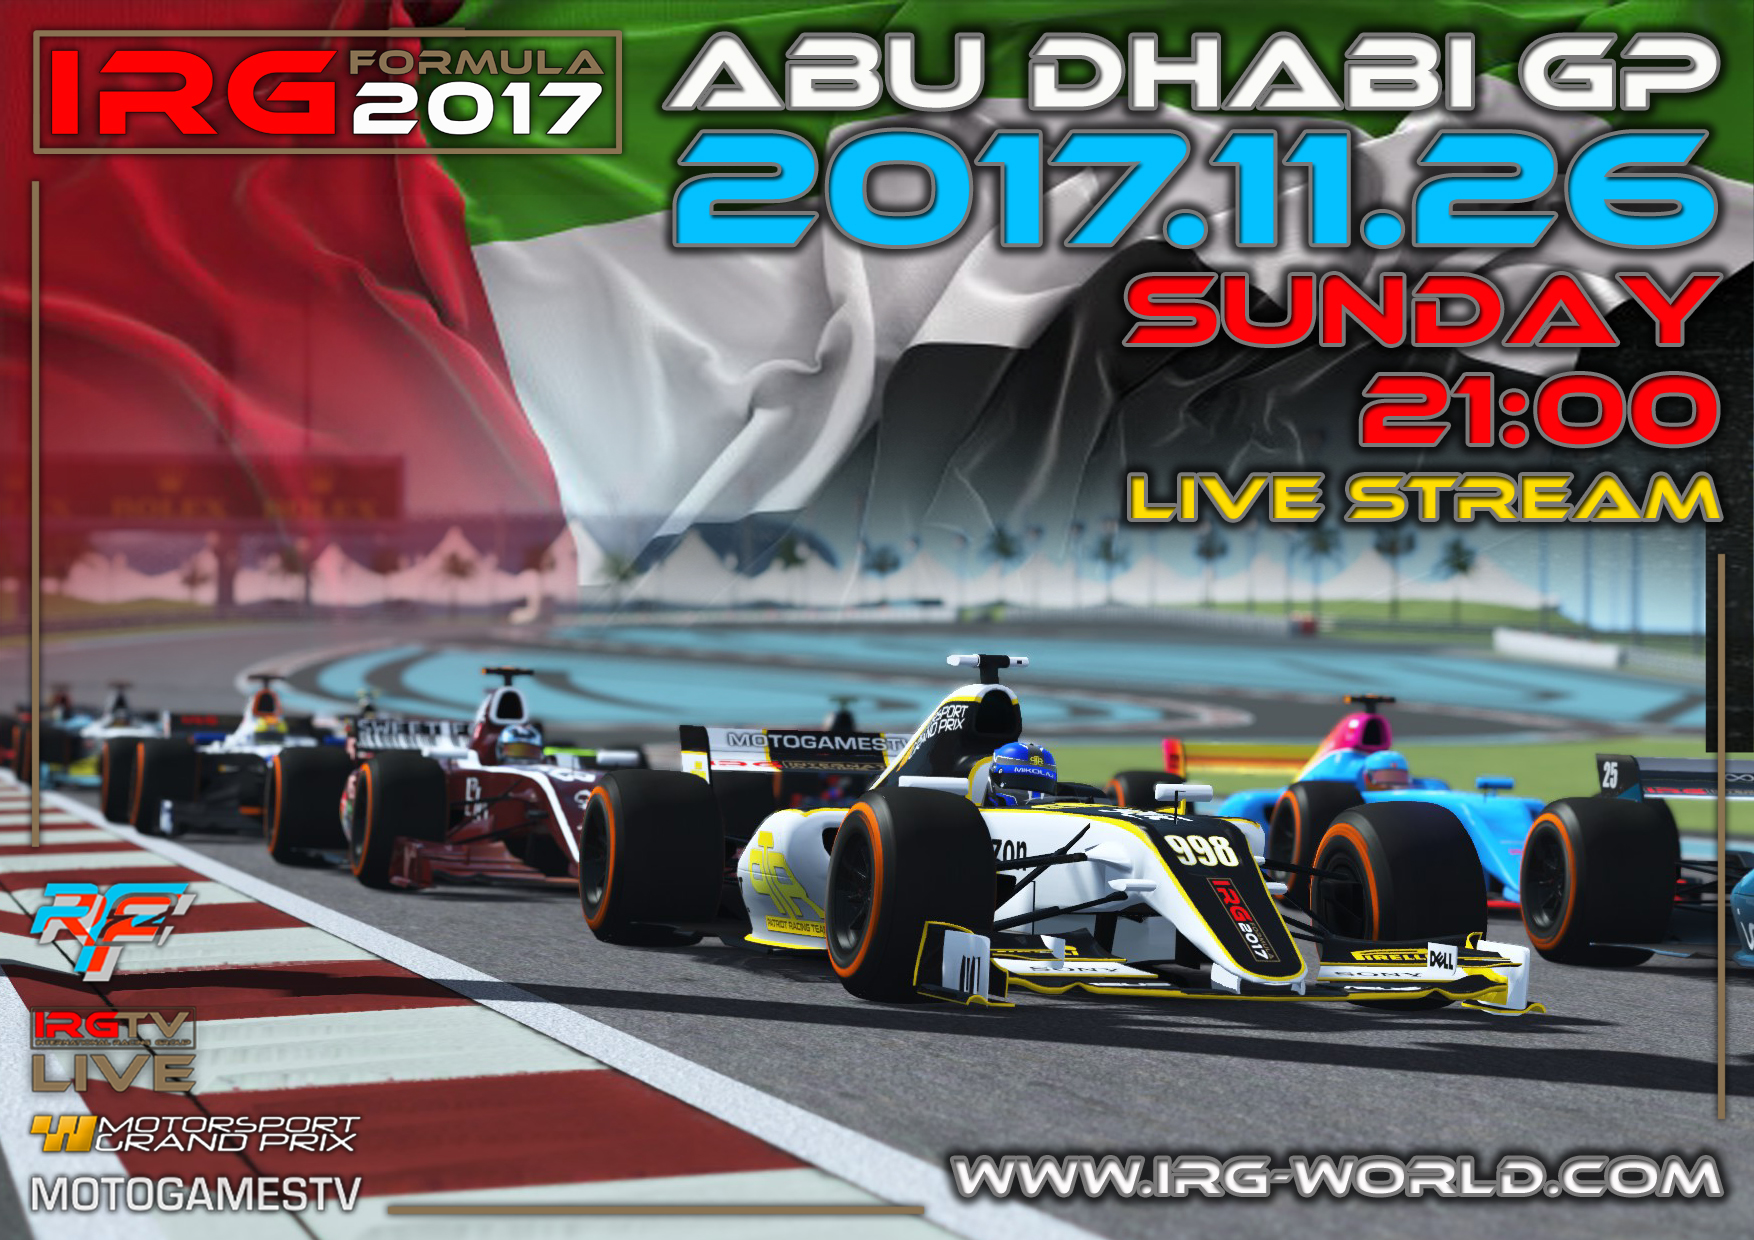 Abu Dhabi GP 03x.jpg